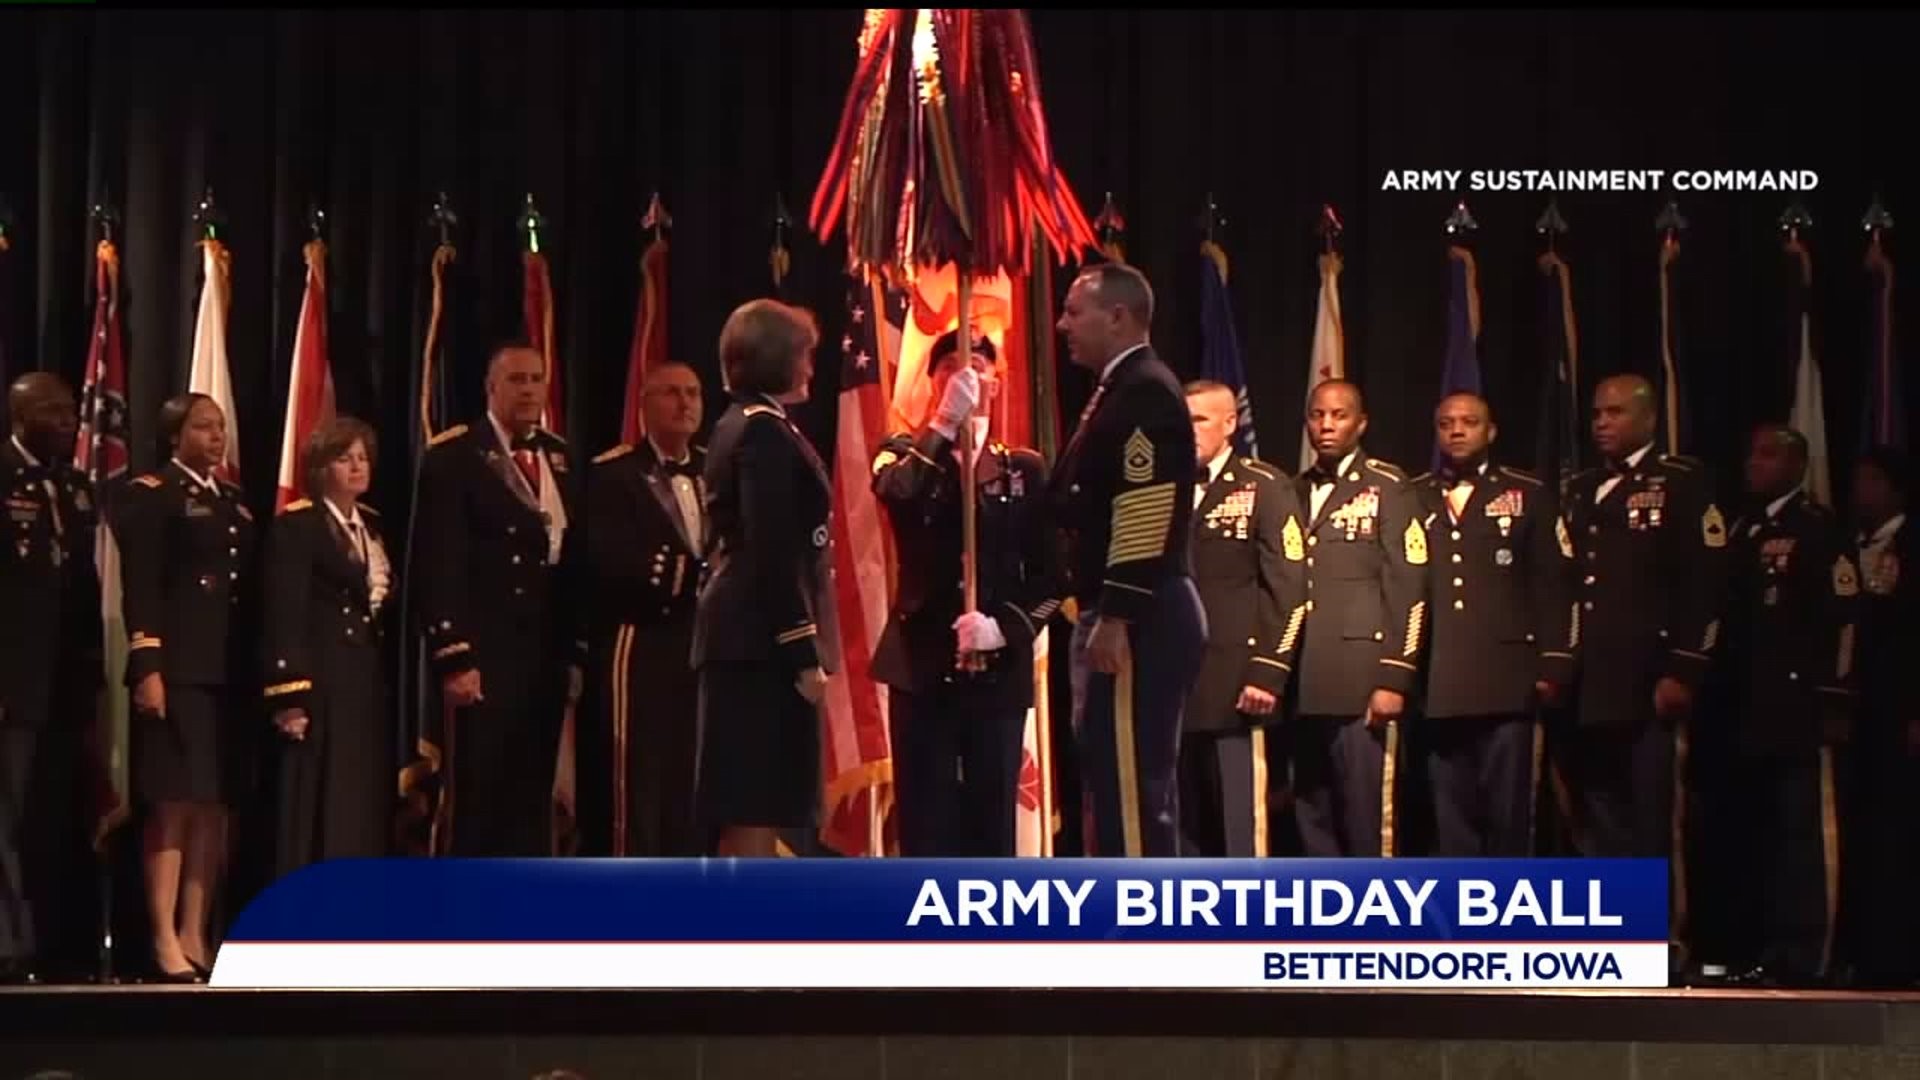 The QC Army Birthday Ball